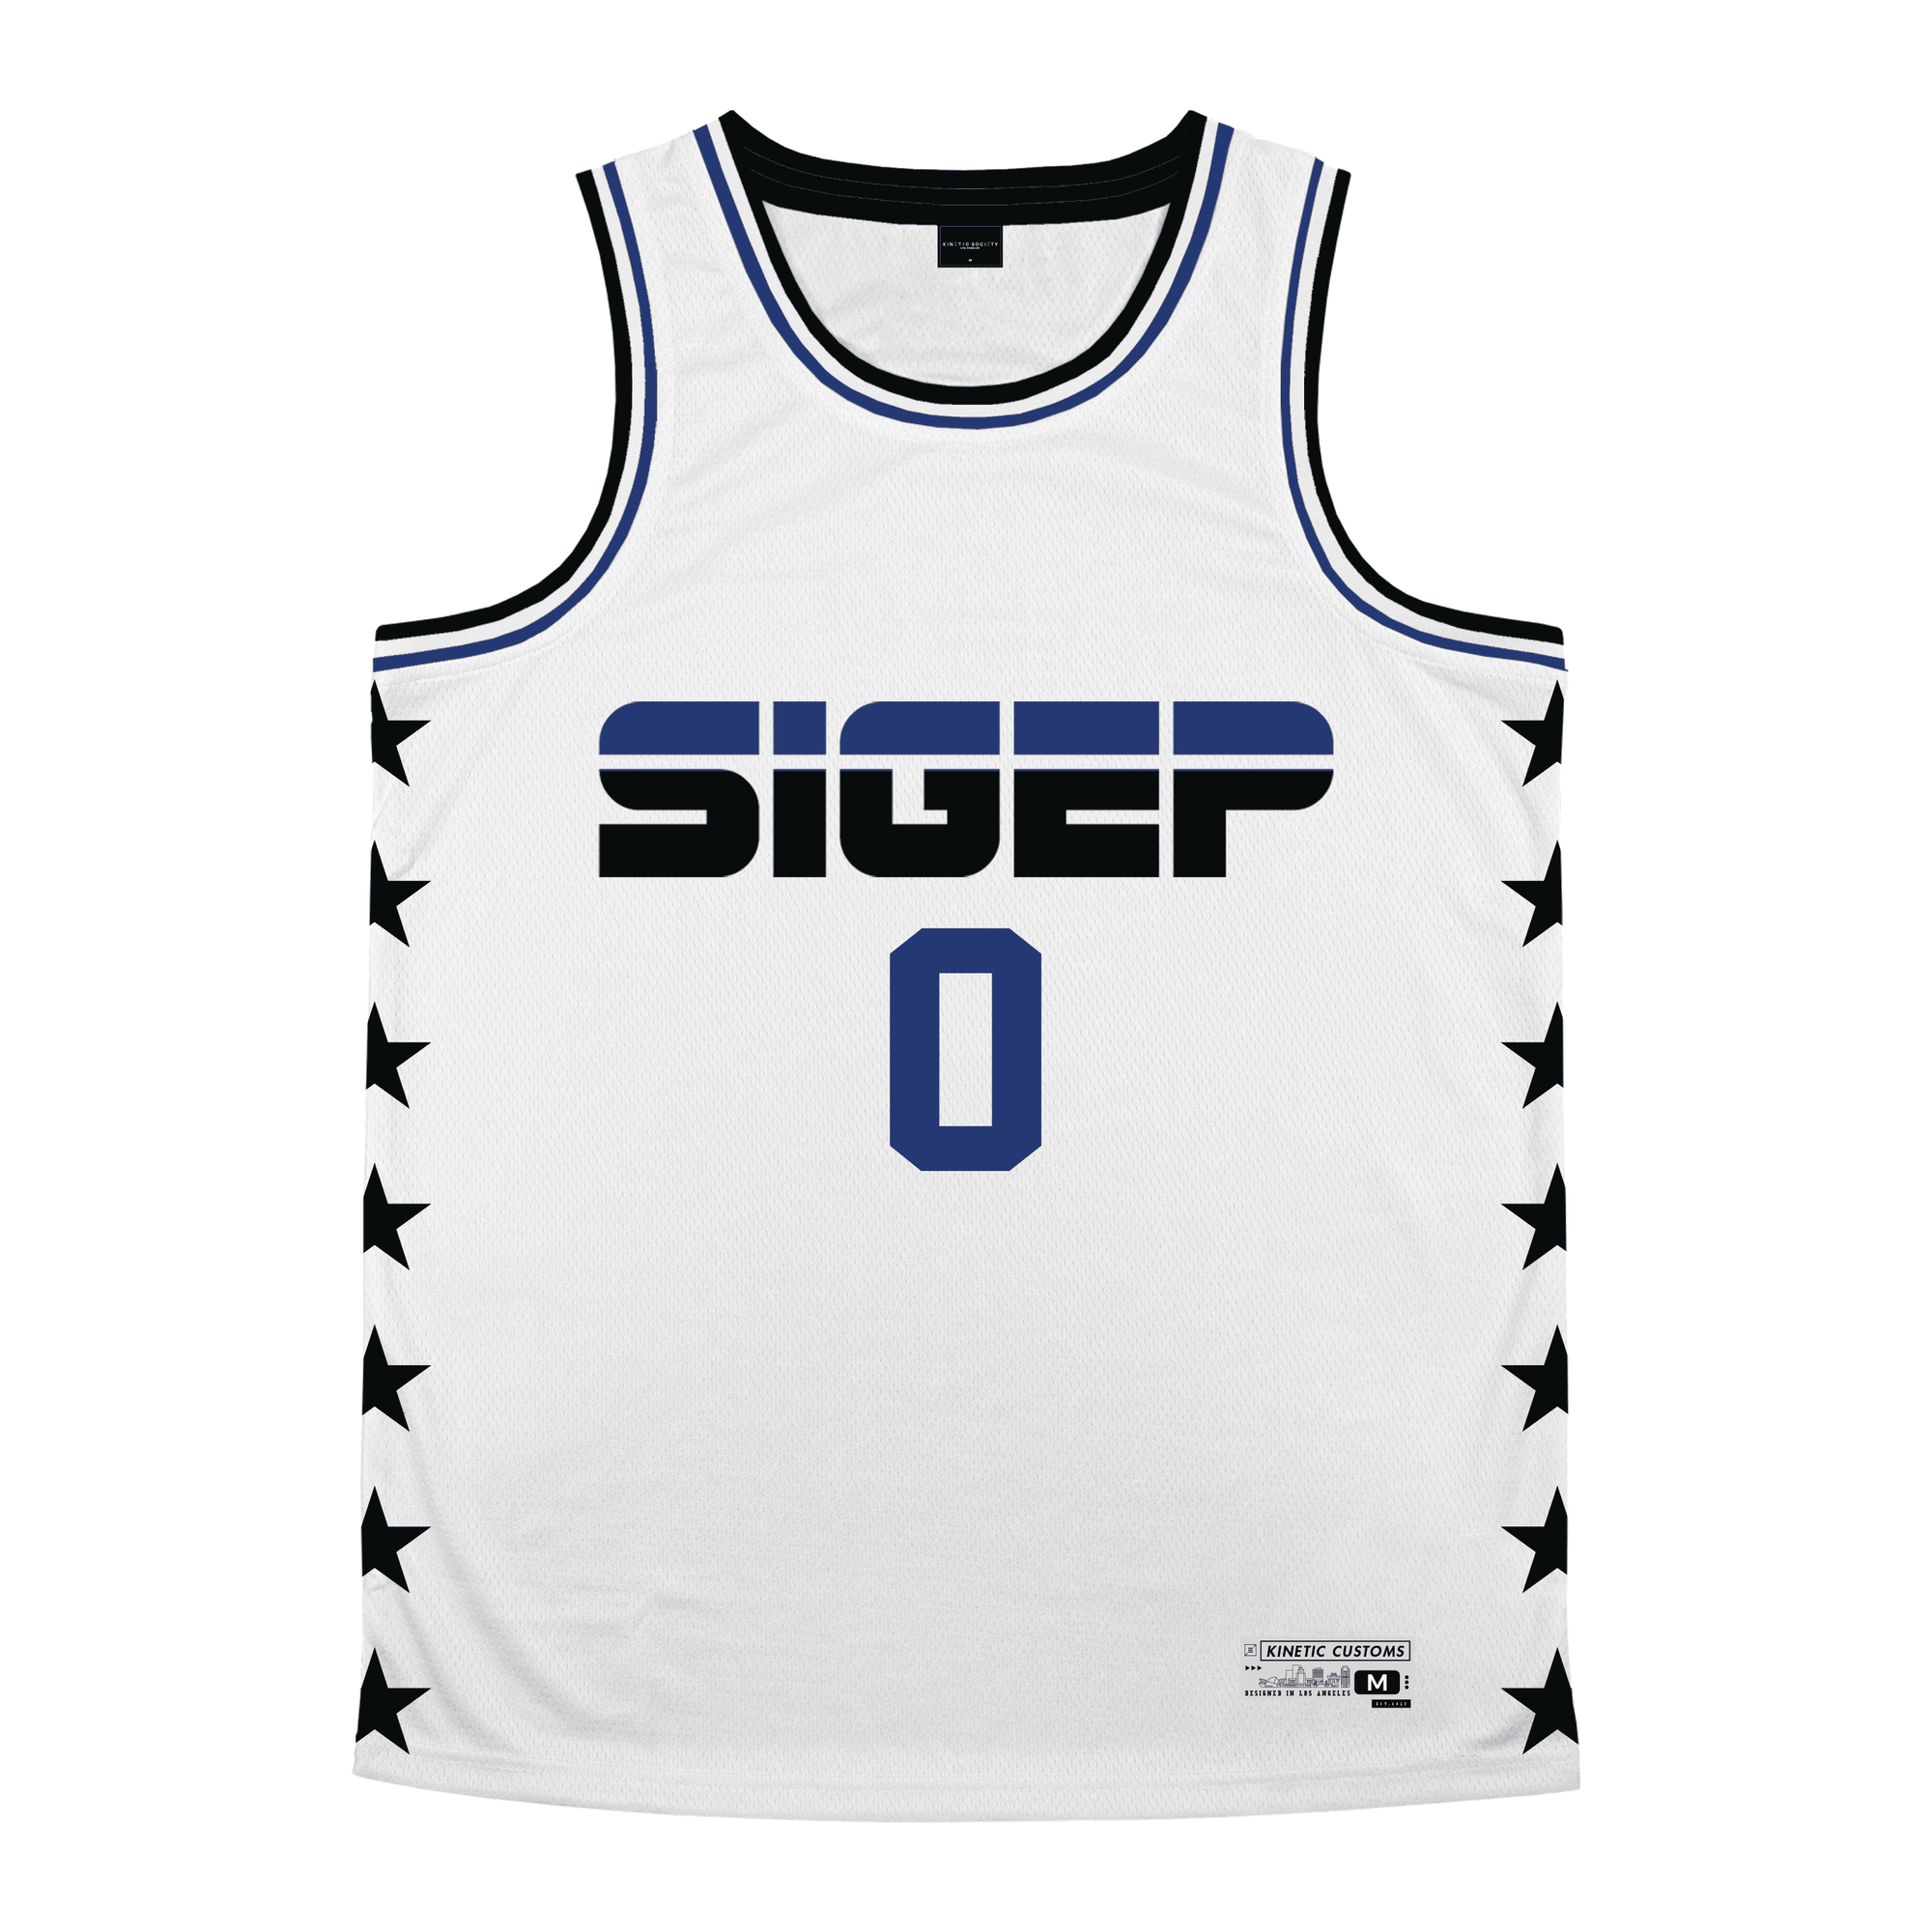 Sigma Phi Epsilon - Black Star Basketball Jersey